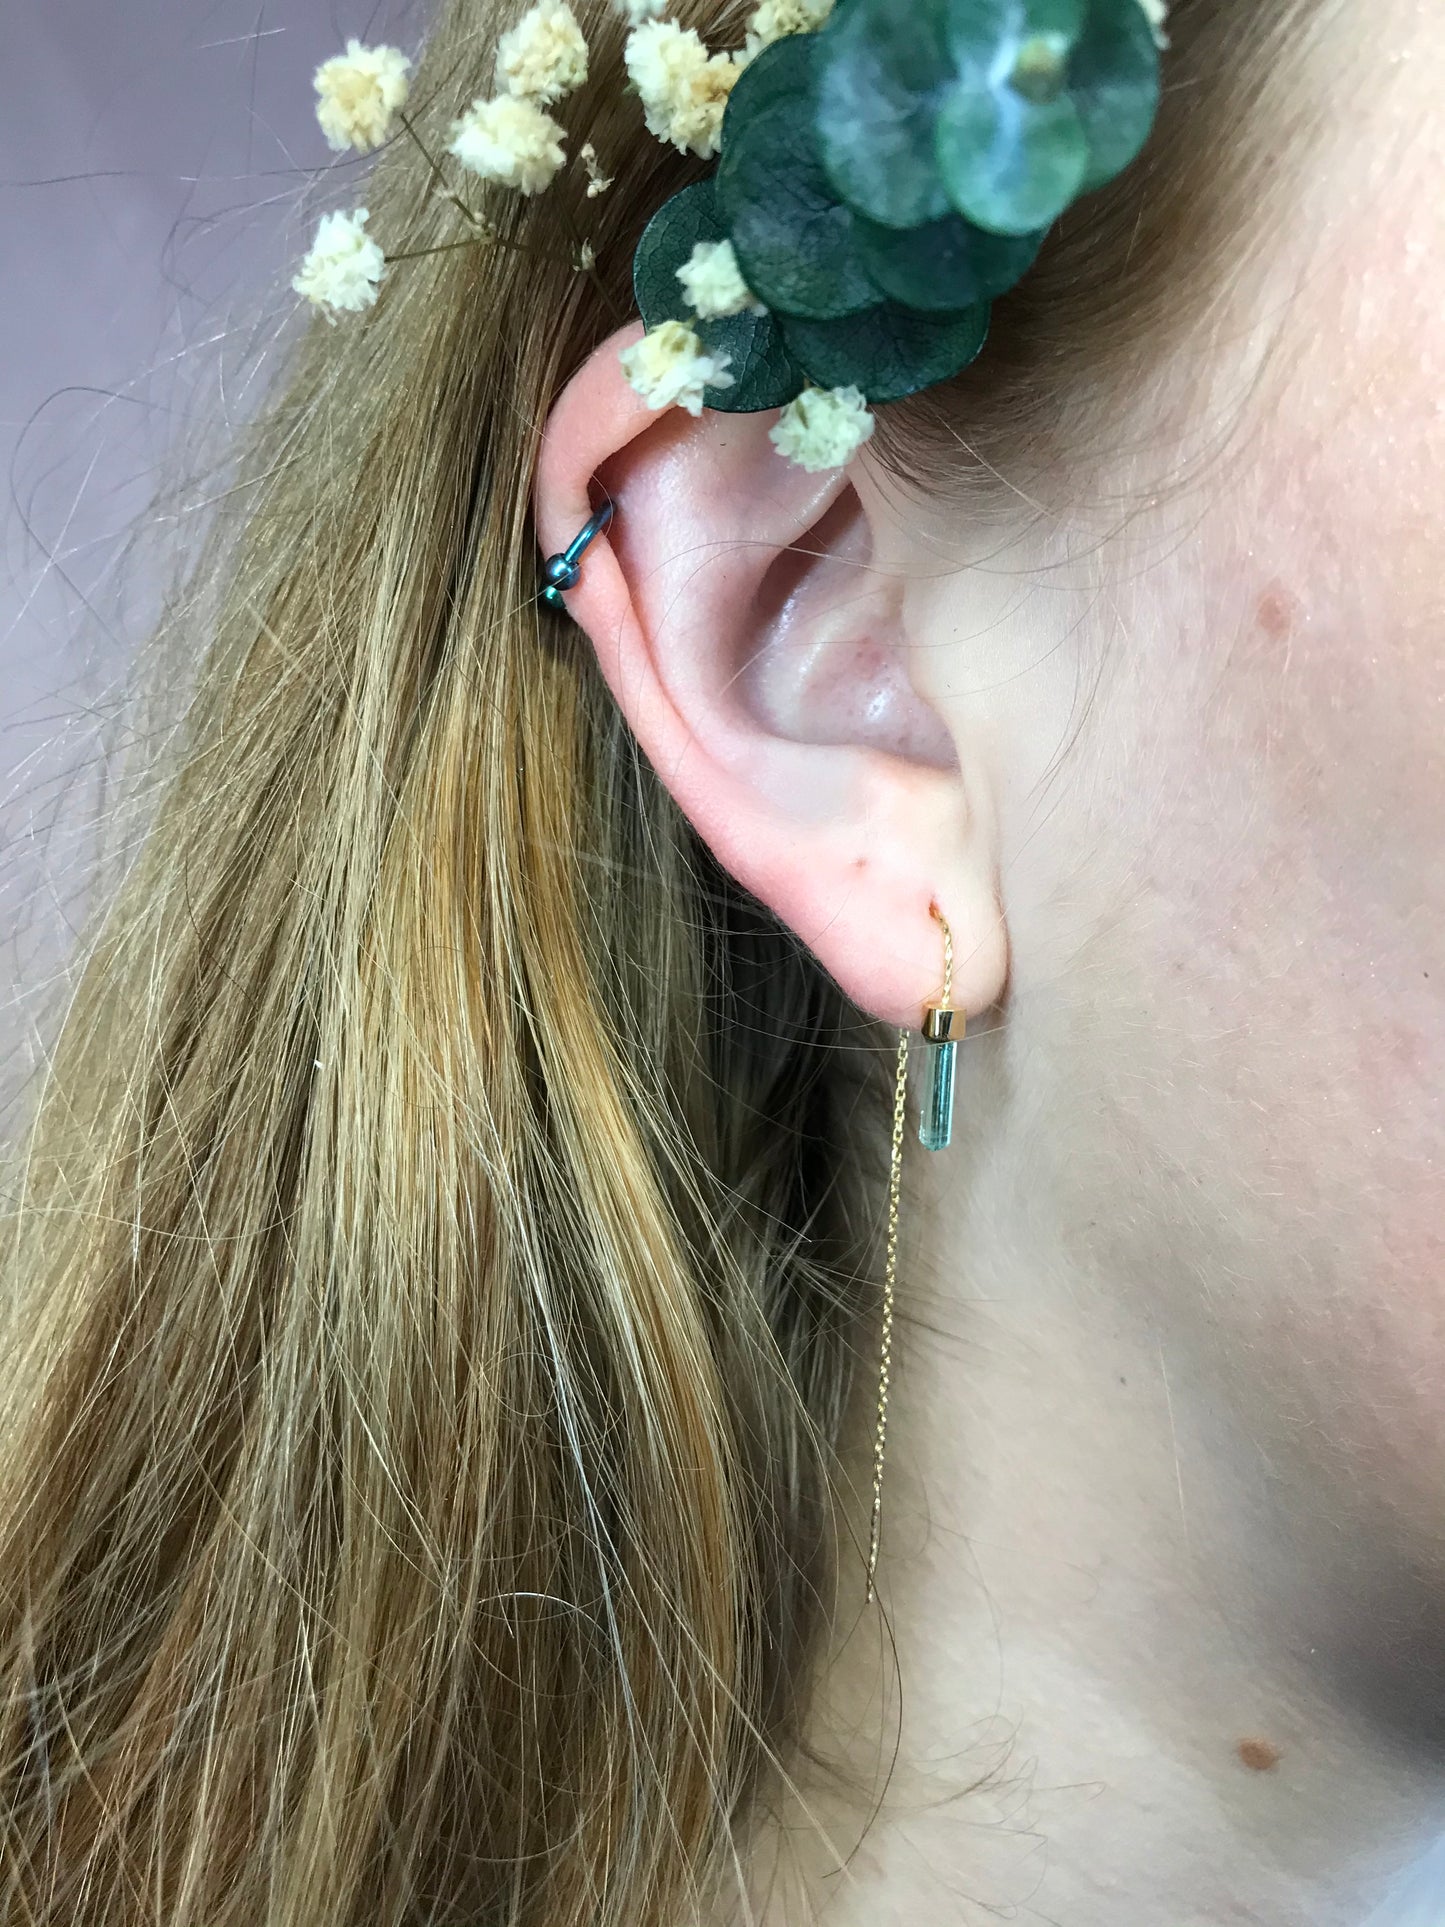 Boucles d’oreilles tourmalines vert bleuté et or 18k.